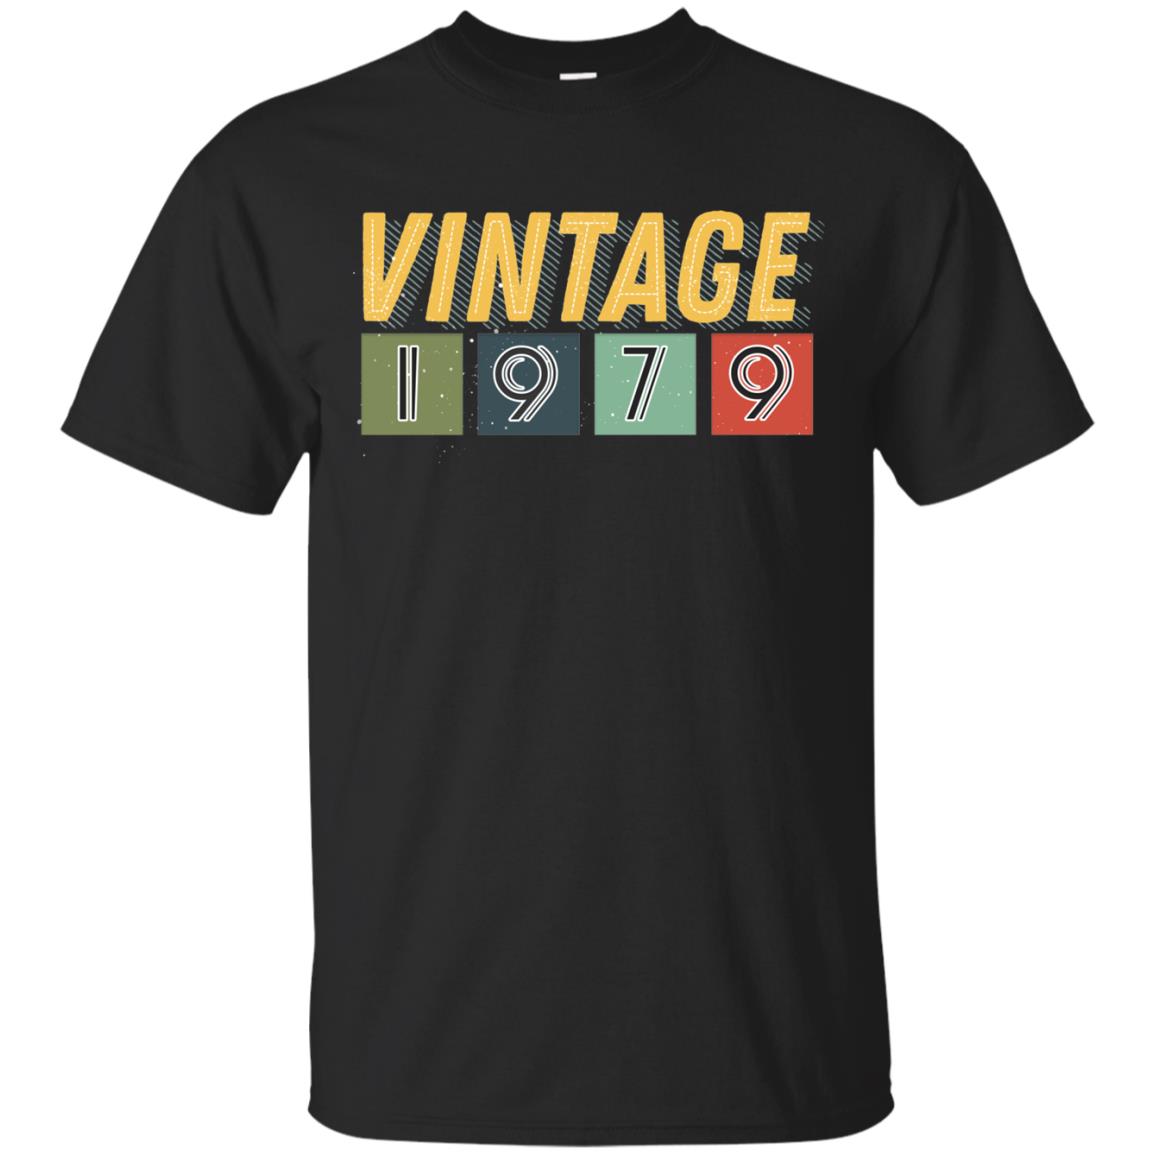 Vintage 1979 39th Birthday Gift Shirt For Mens Or WomensG200 Gildan Ultra Cotton T-Shirt